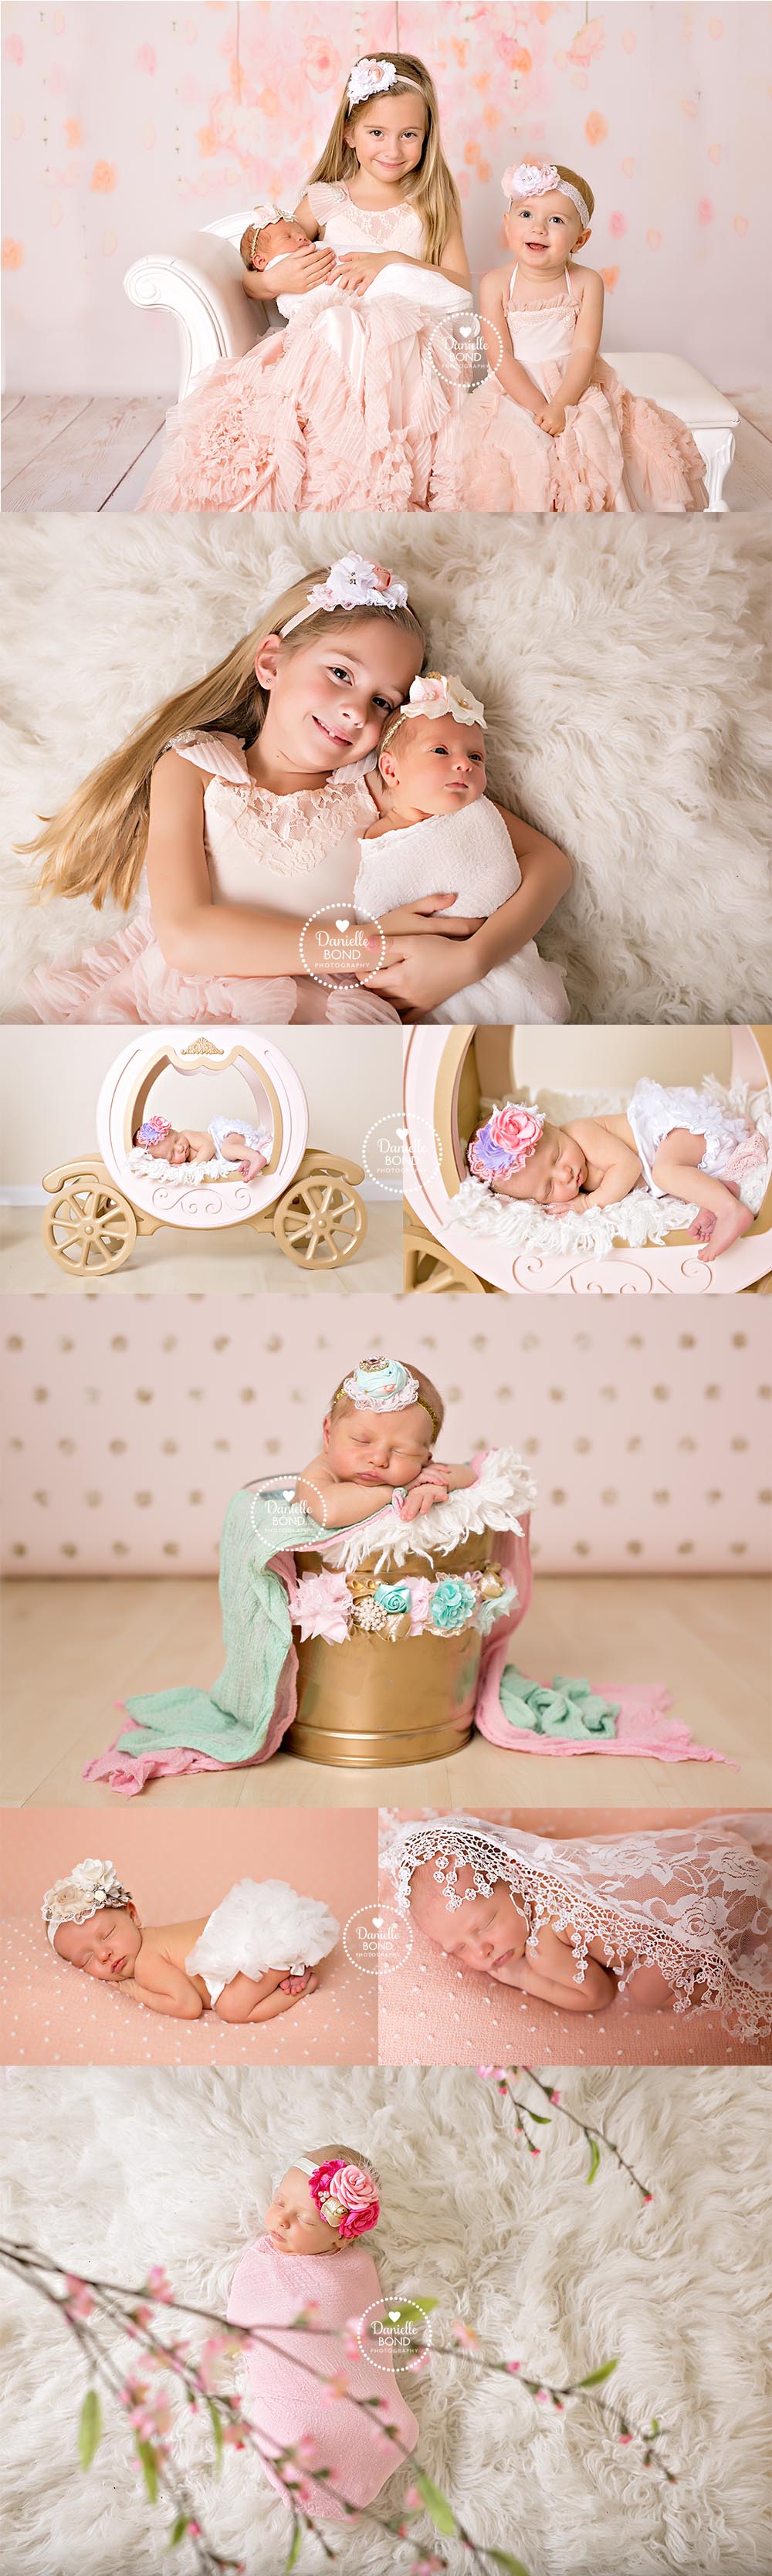 newborn girl with her sisters-Denver, CO newborn photographer